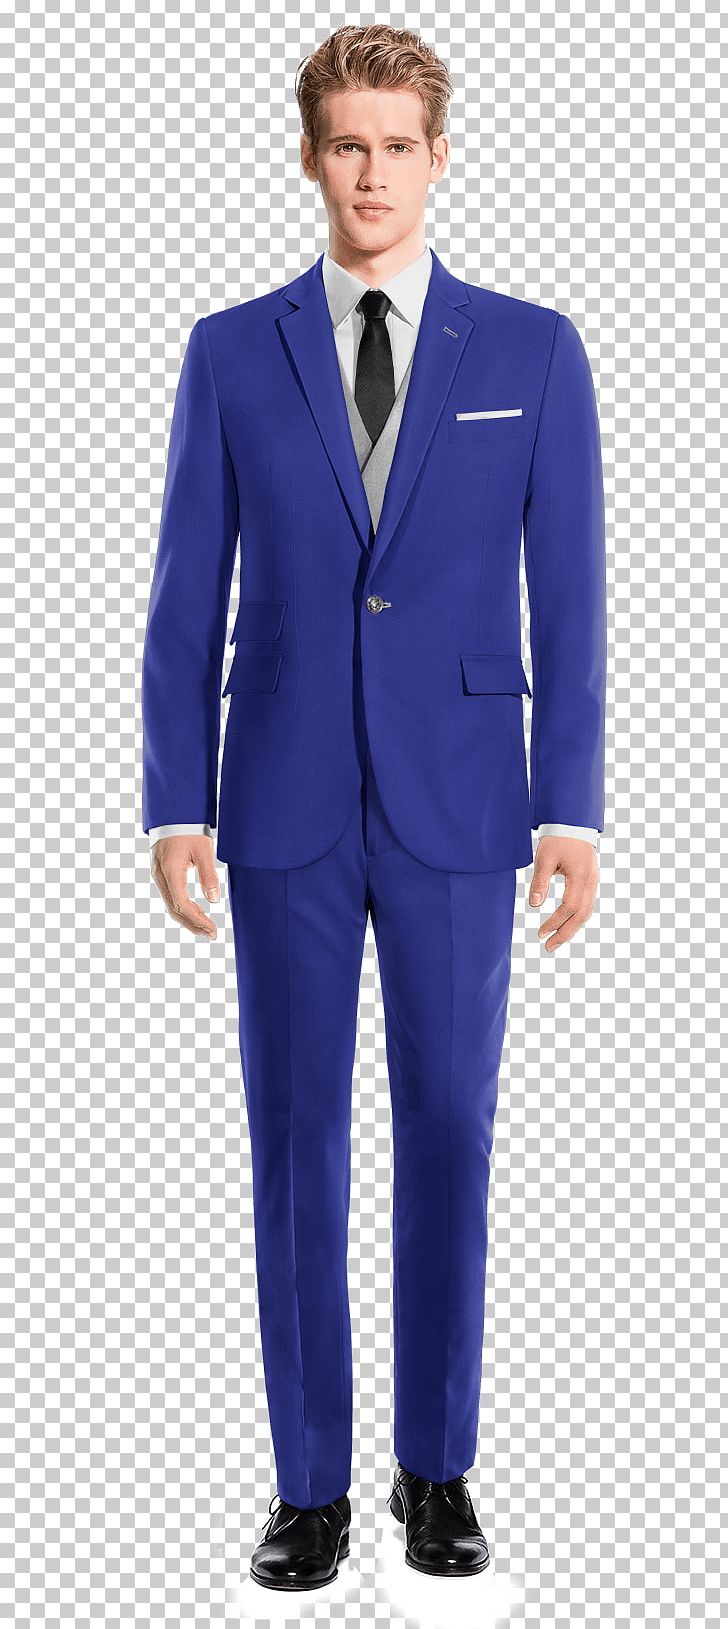 Suit Corduroy Upturned Collar Tweed Sport Coat PNG, Clipart, Blazer, Blue, Businessperson, Clothing, Cobalt Blue Free PNG Download